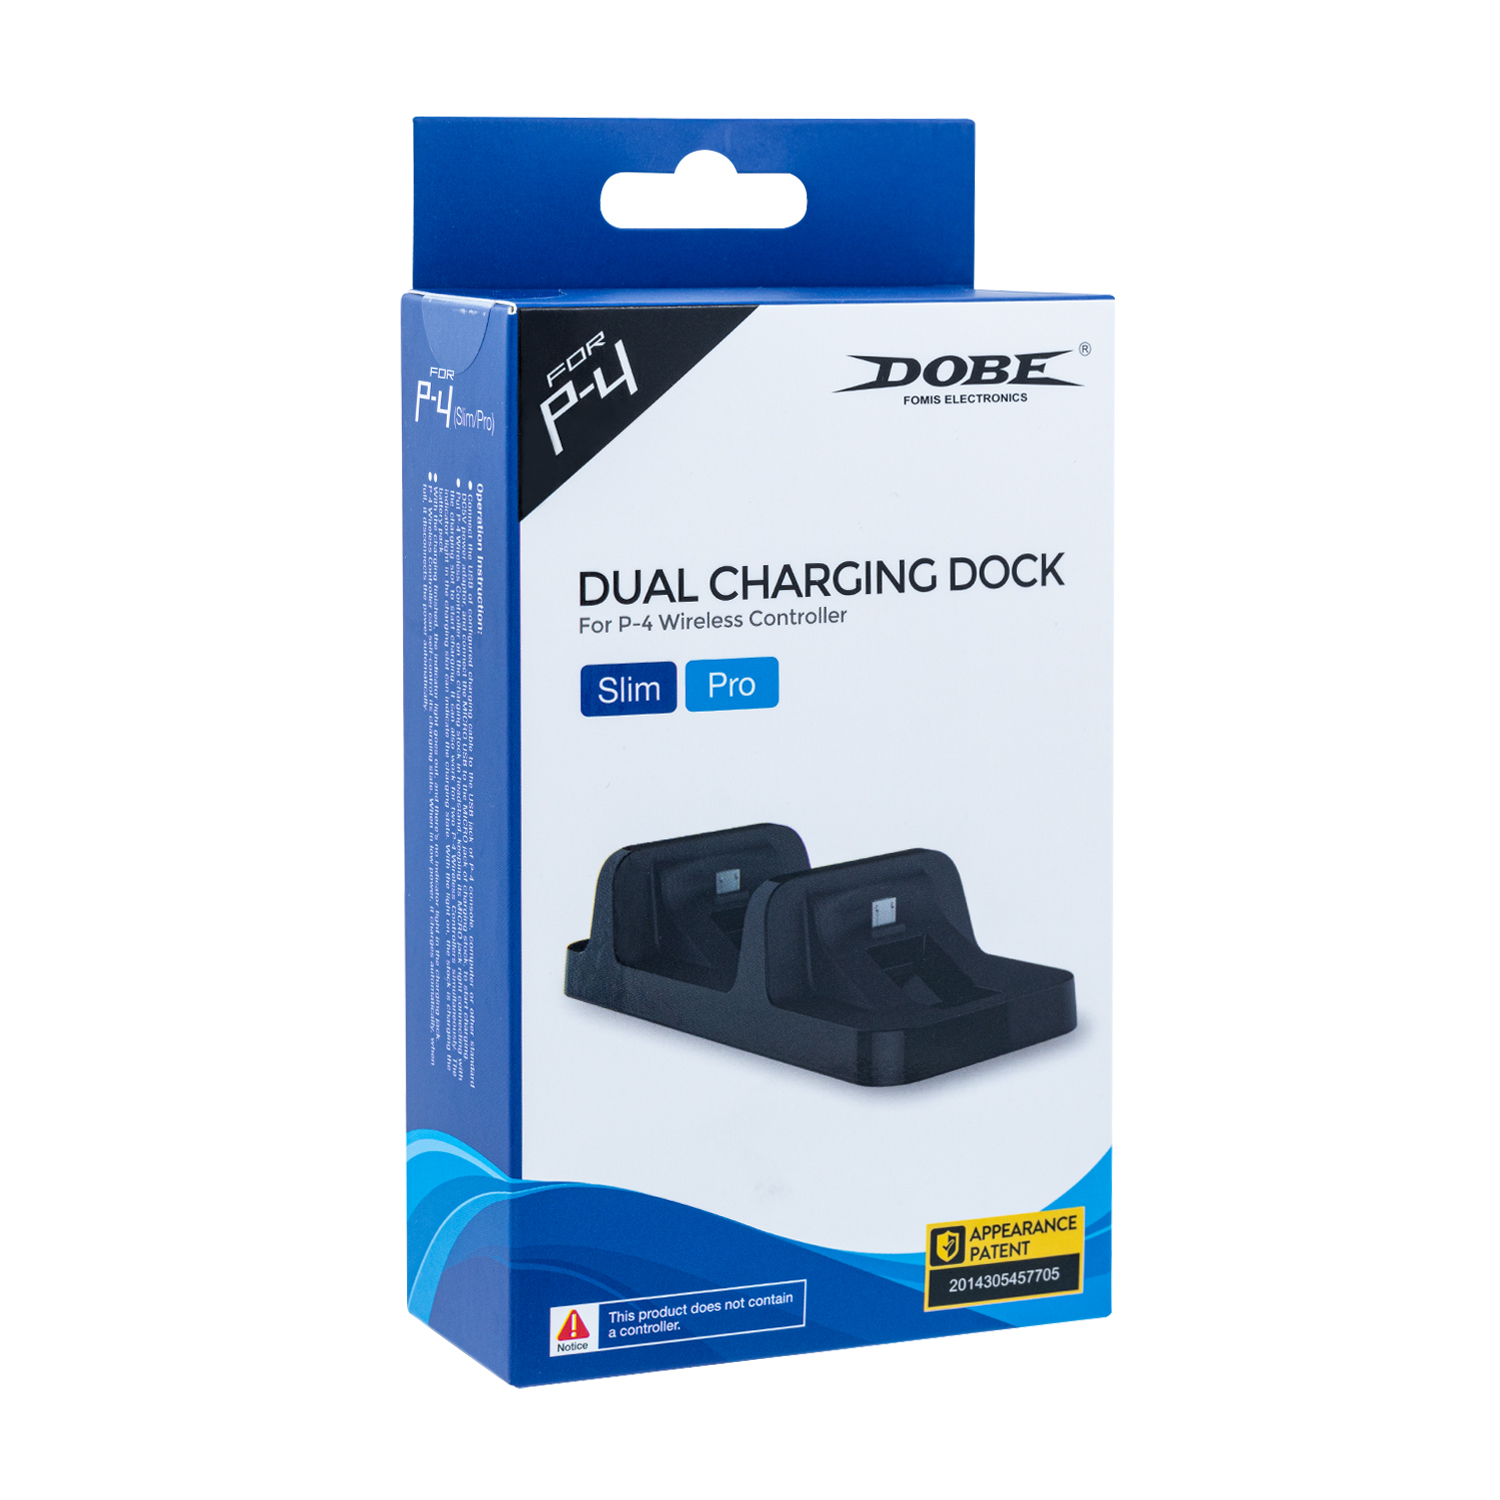 DOBE Dual Charging Dock for PS4 Wireless Controller 價錢、規格及用家意見-  香港格價網Price.com.hk